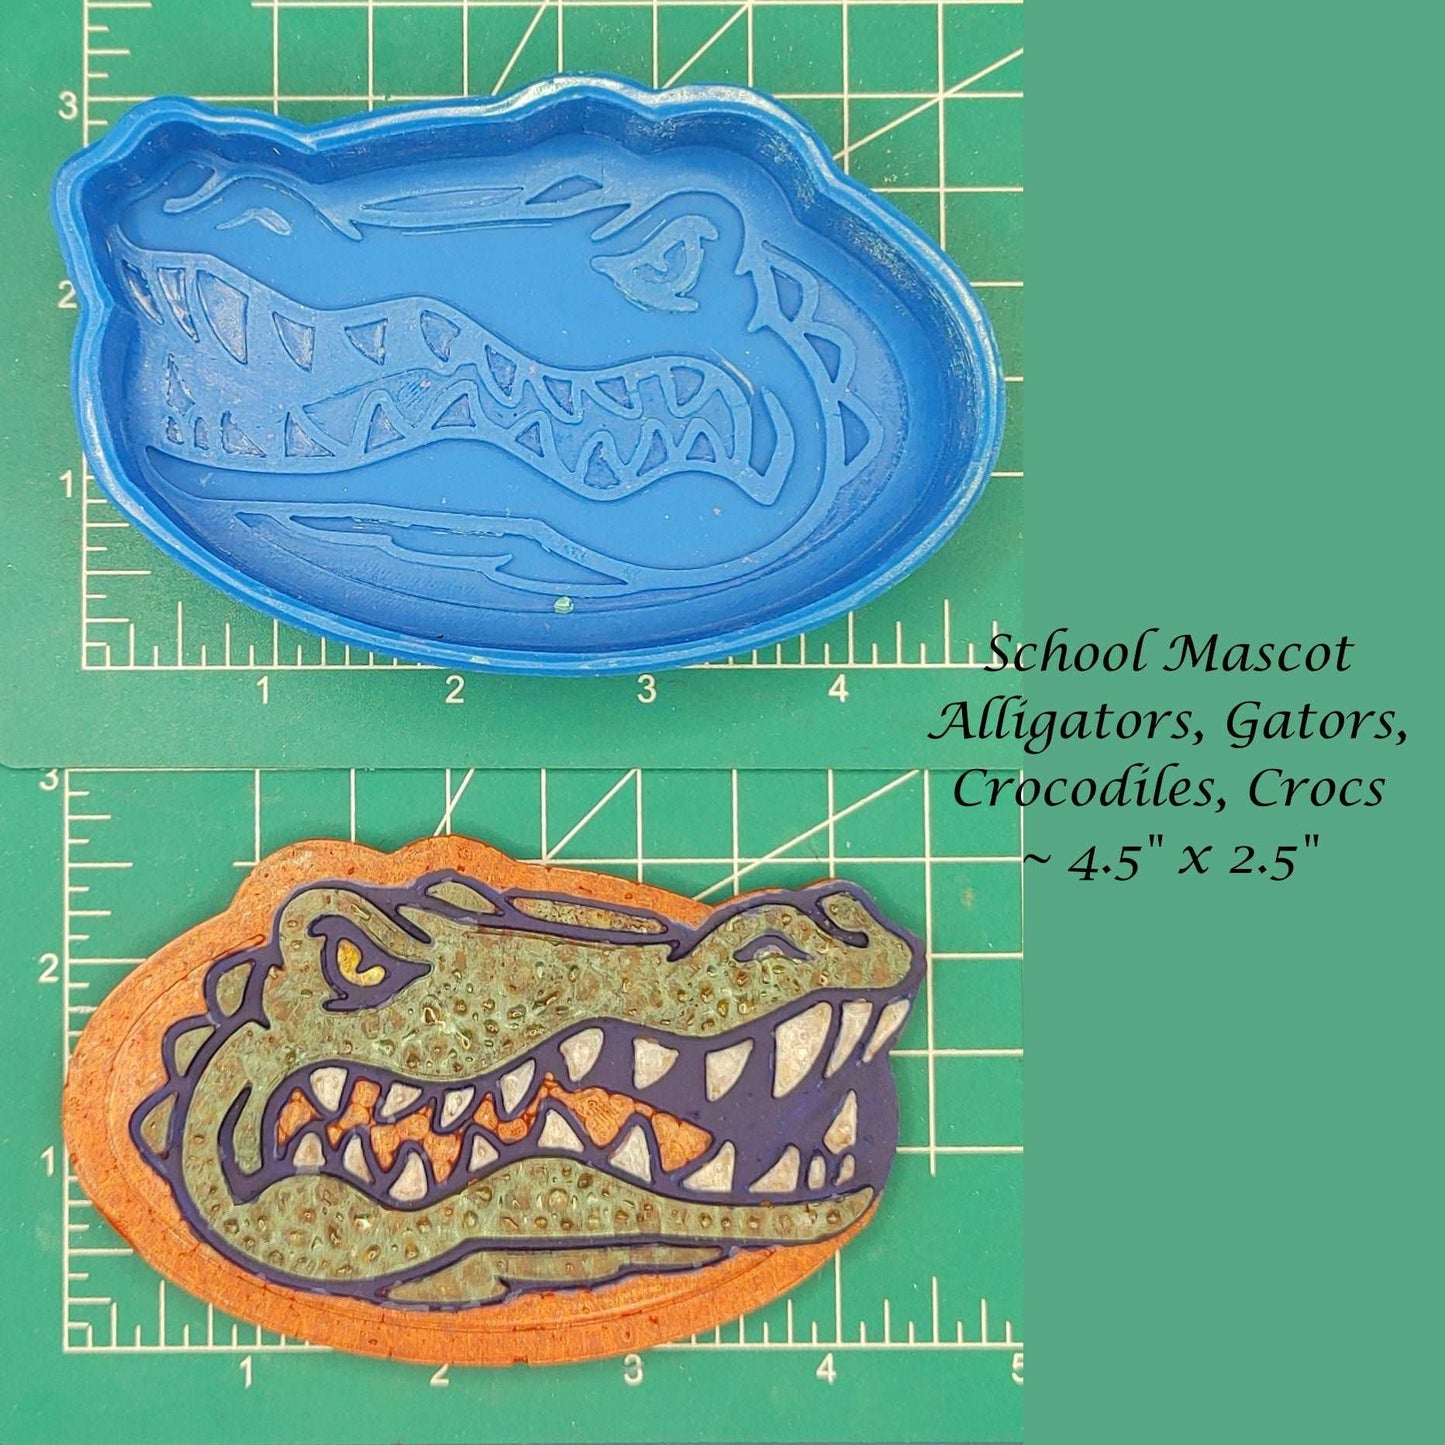 Alligators, Gators, Crocodiles, Crocs School Mascot - Silicone Freshie Mold